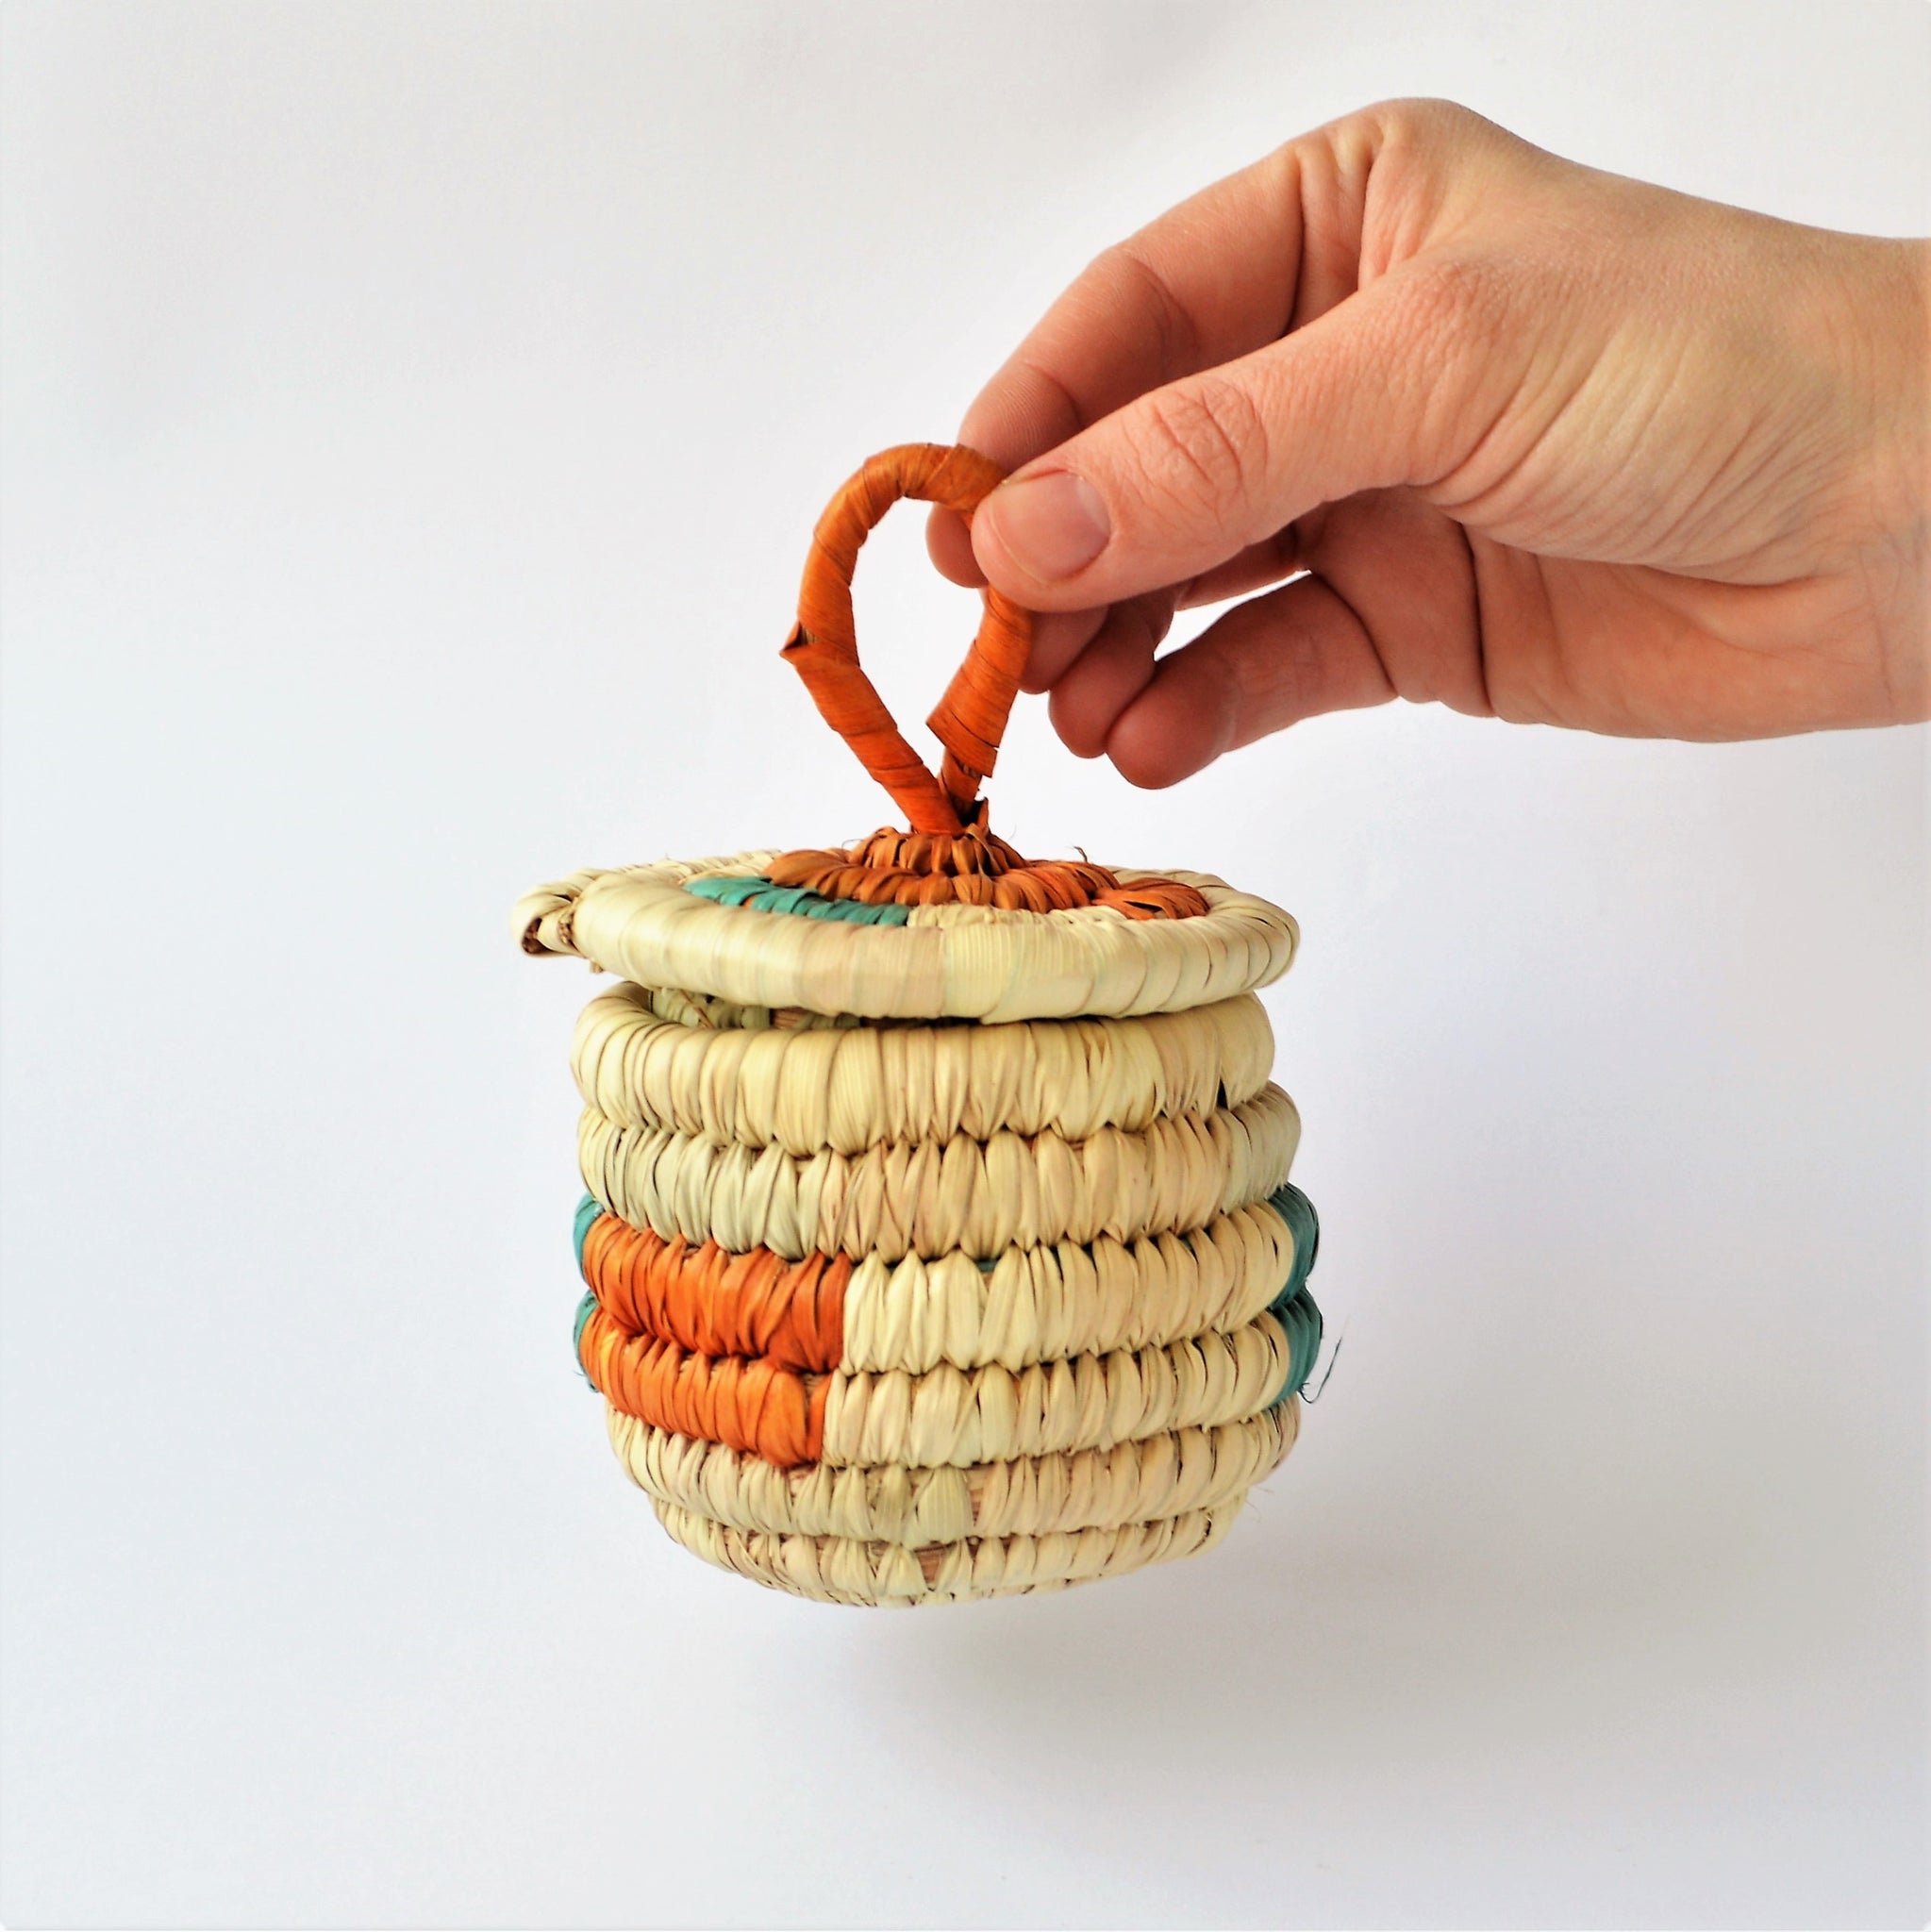 Handmade jewelry wicker basket from palm leaves